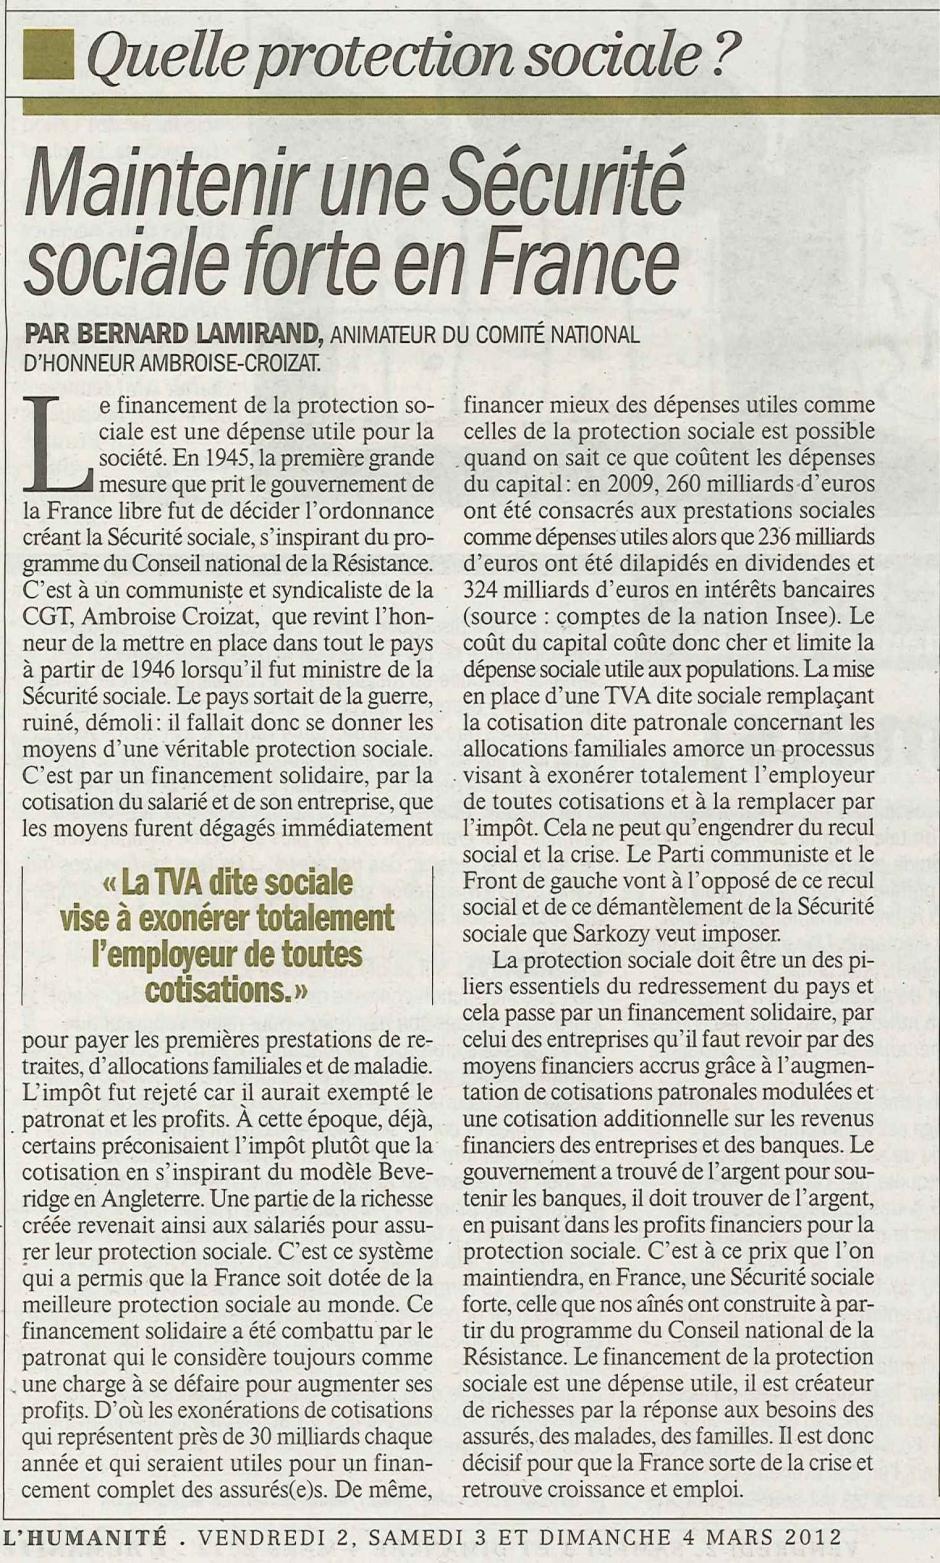 20120302-L'Huma-France-Bernard Lamirand : maintenir une Sécurité sociale forte